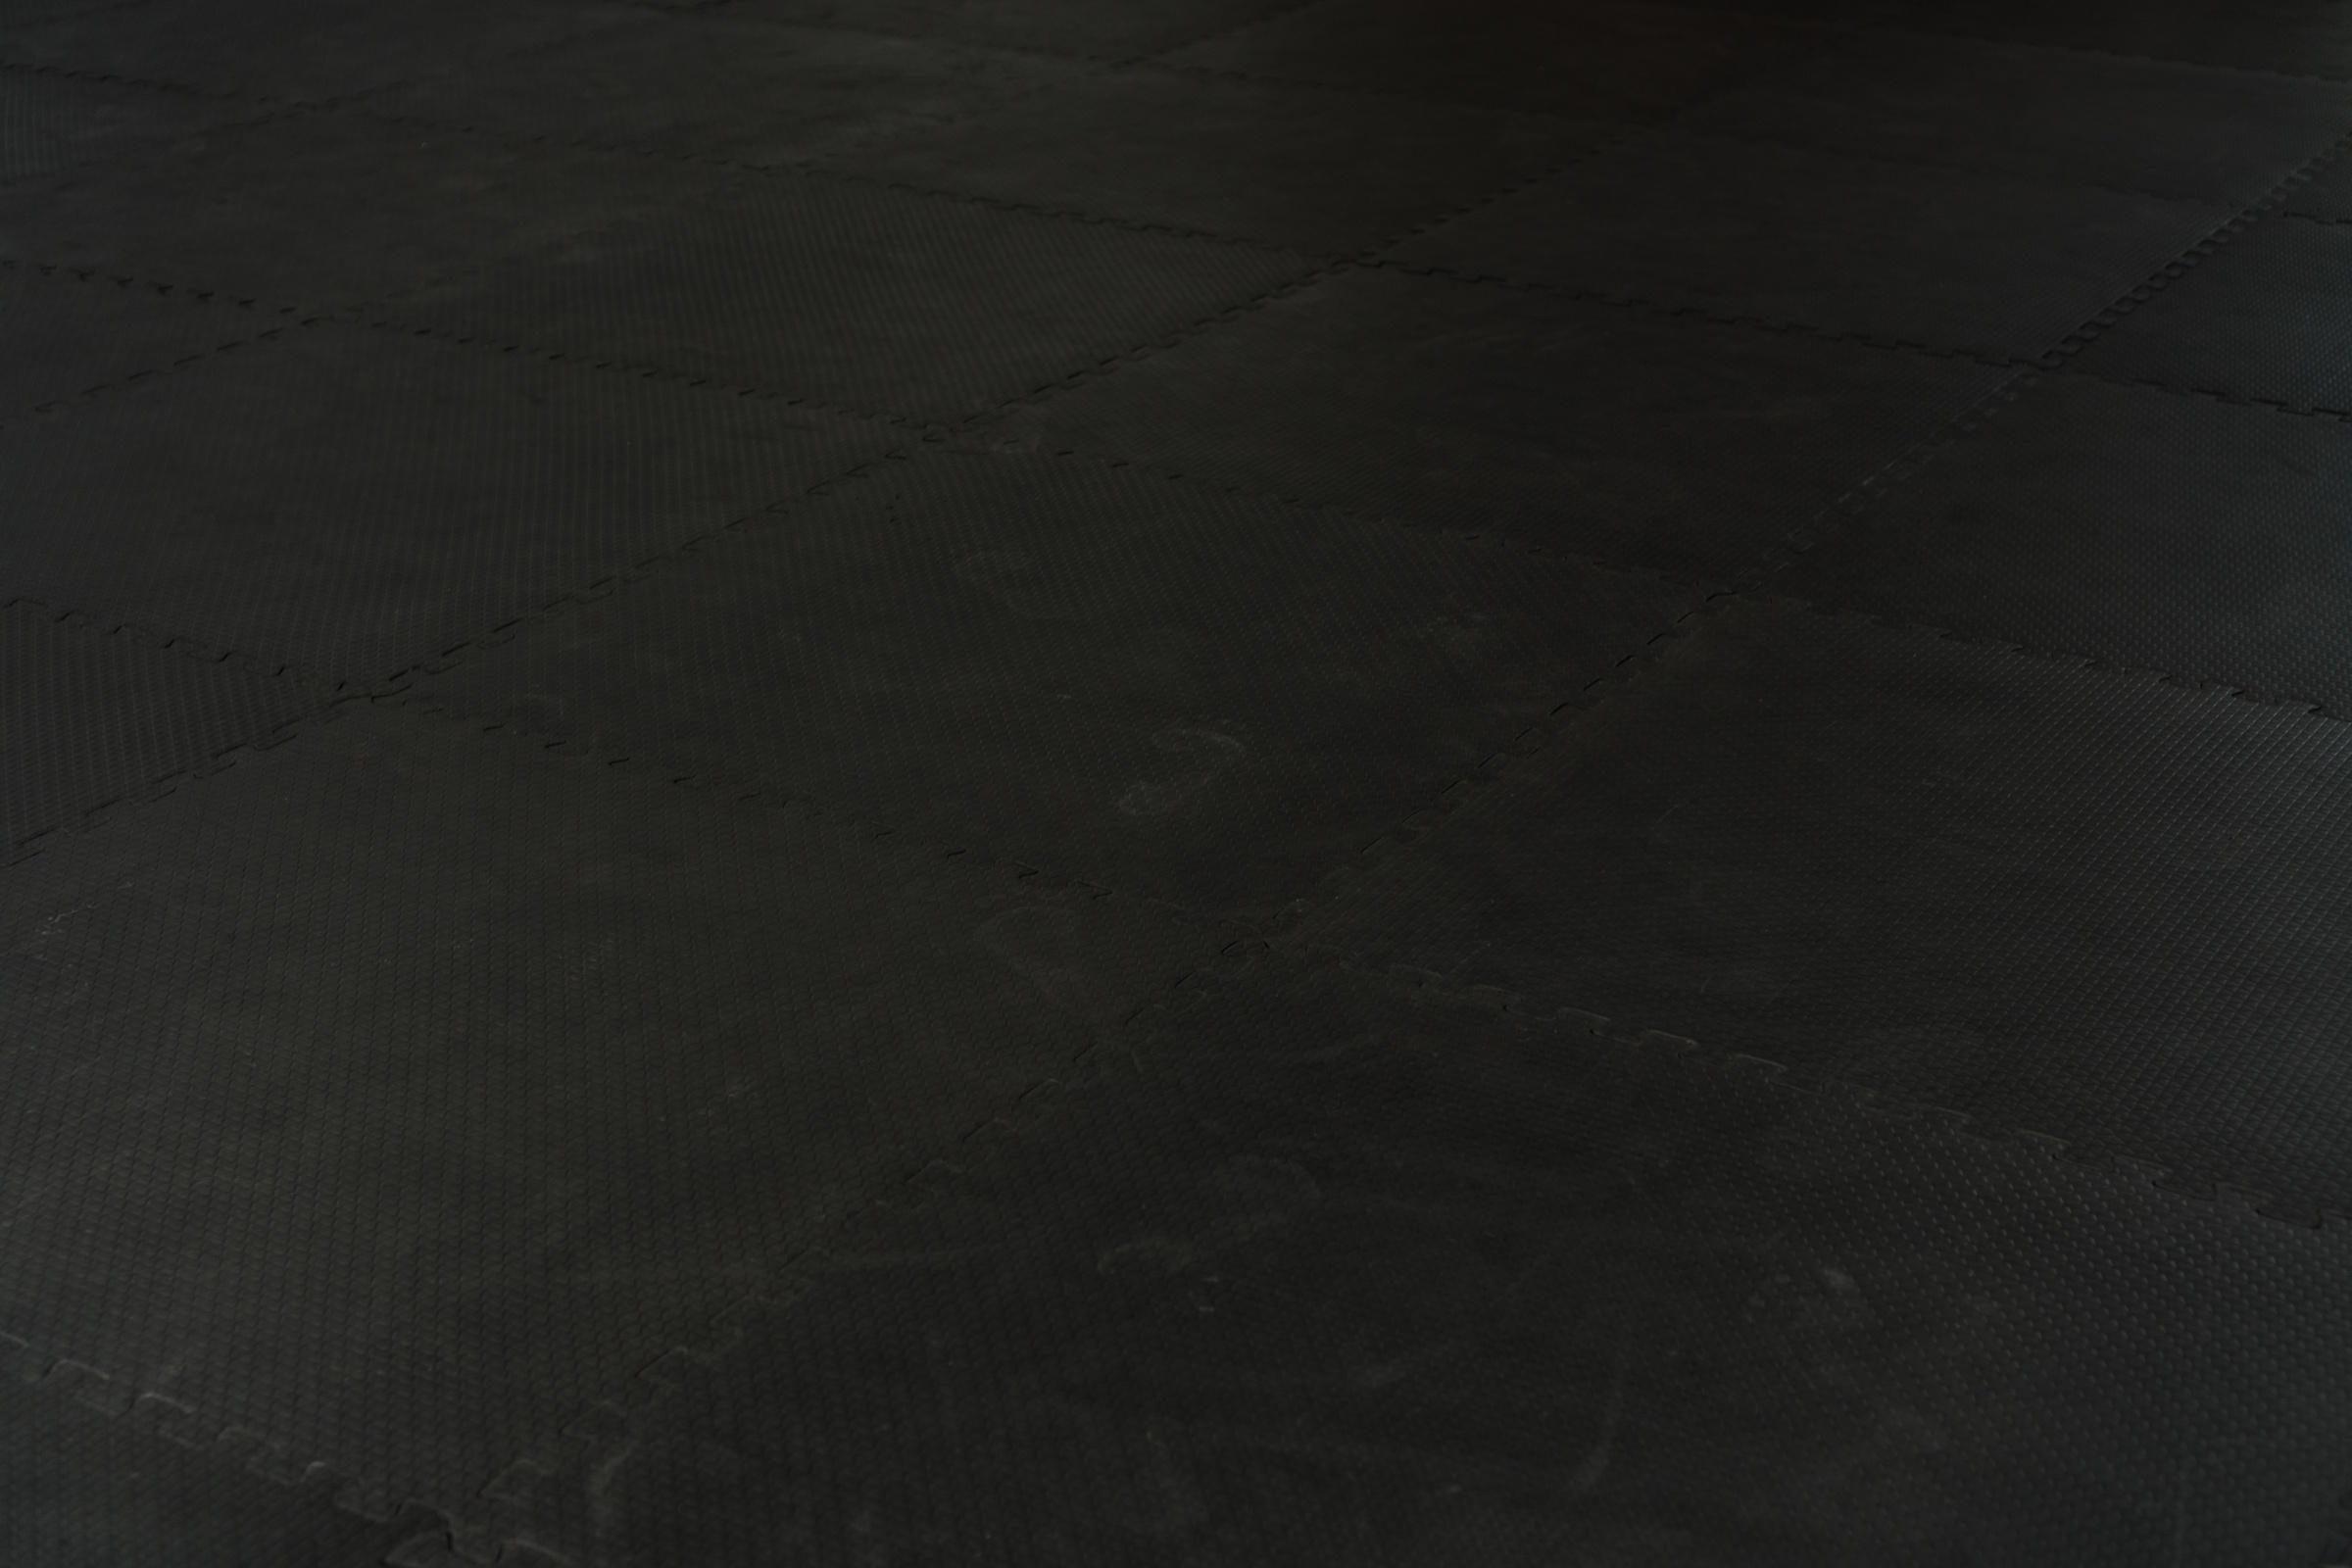 Black rubber floor mat and tiles inside a gym.